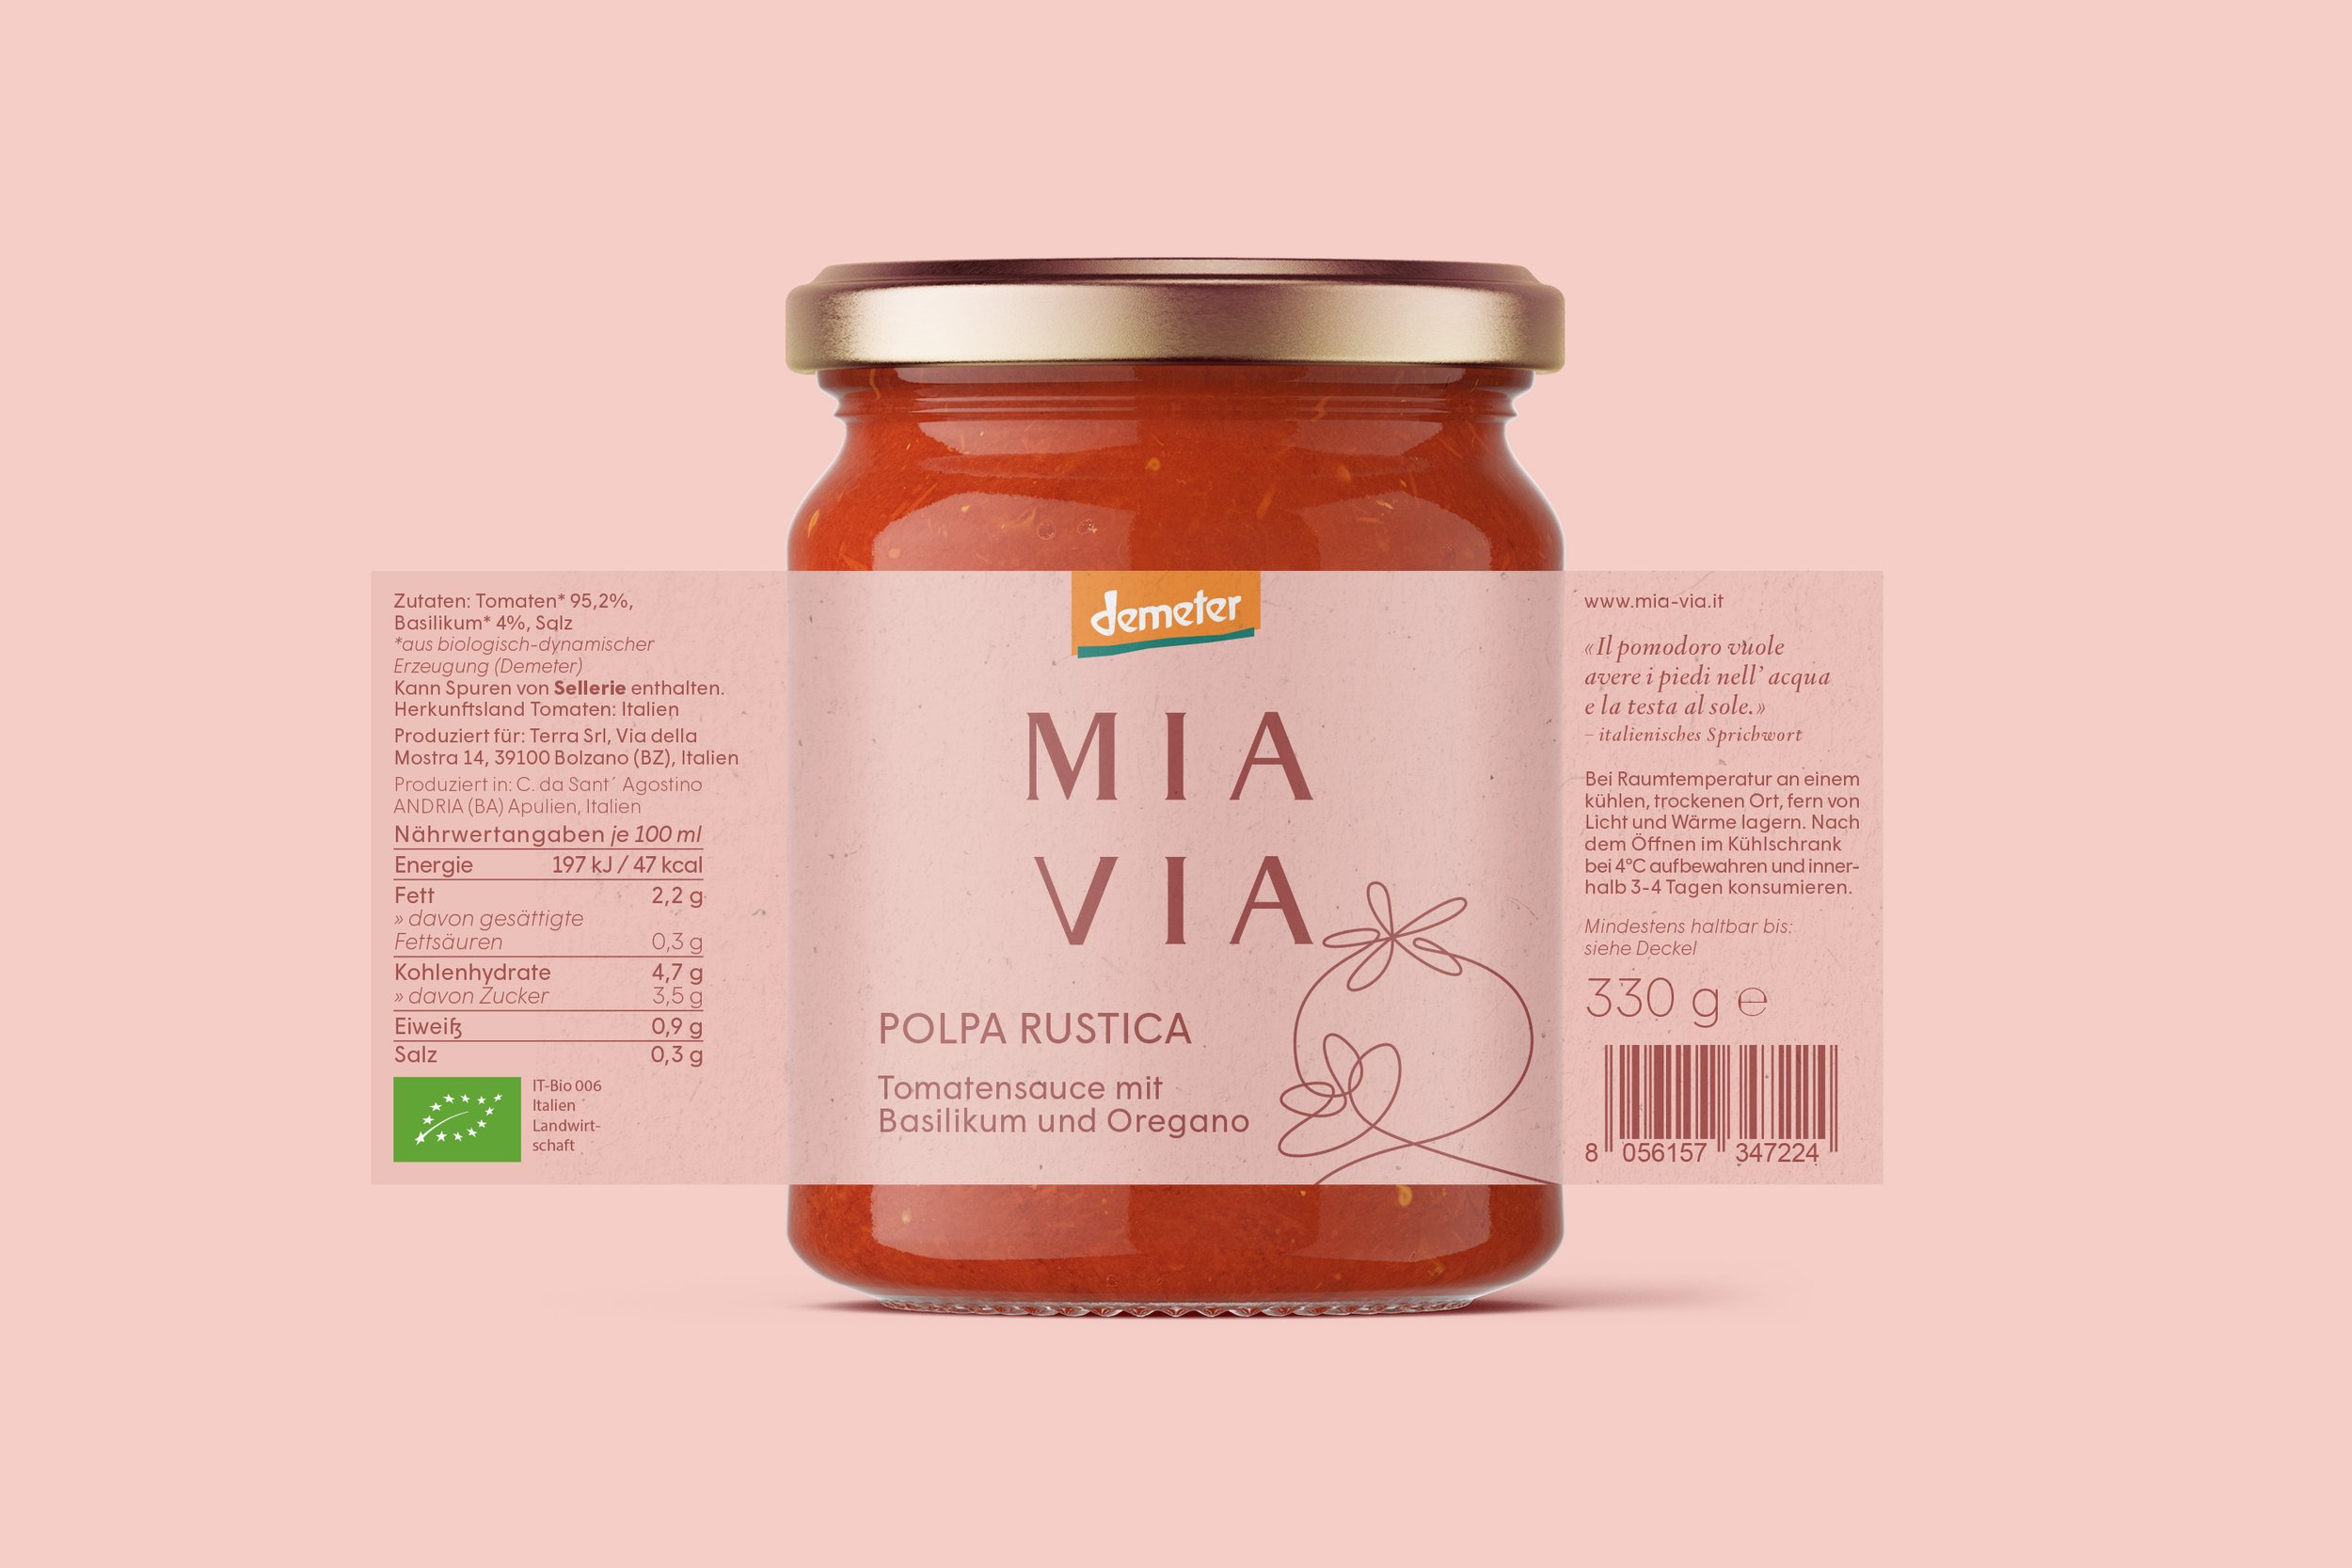 mia-via-tomato-sauce-packaging-design-label.jpg